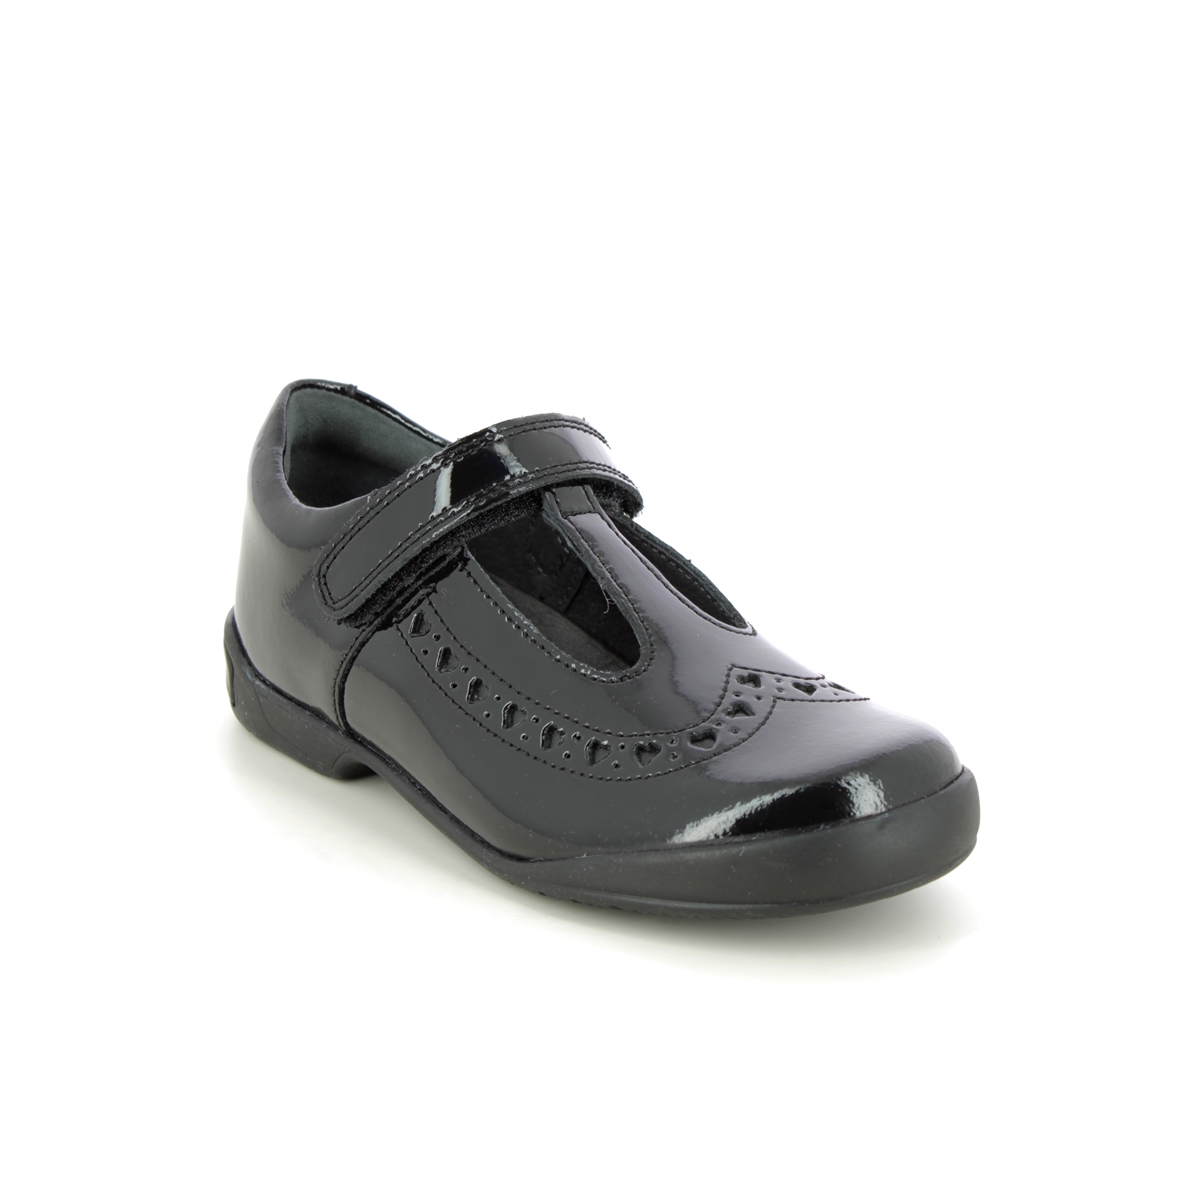 Start Rite - Leapfrog In Black Patent 2789-36F In Size 10.5 In Plain Black Patent For School Girls Shoes  In Black Patent For kids